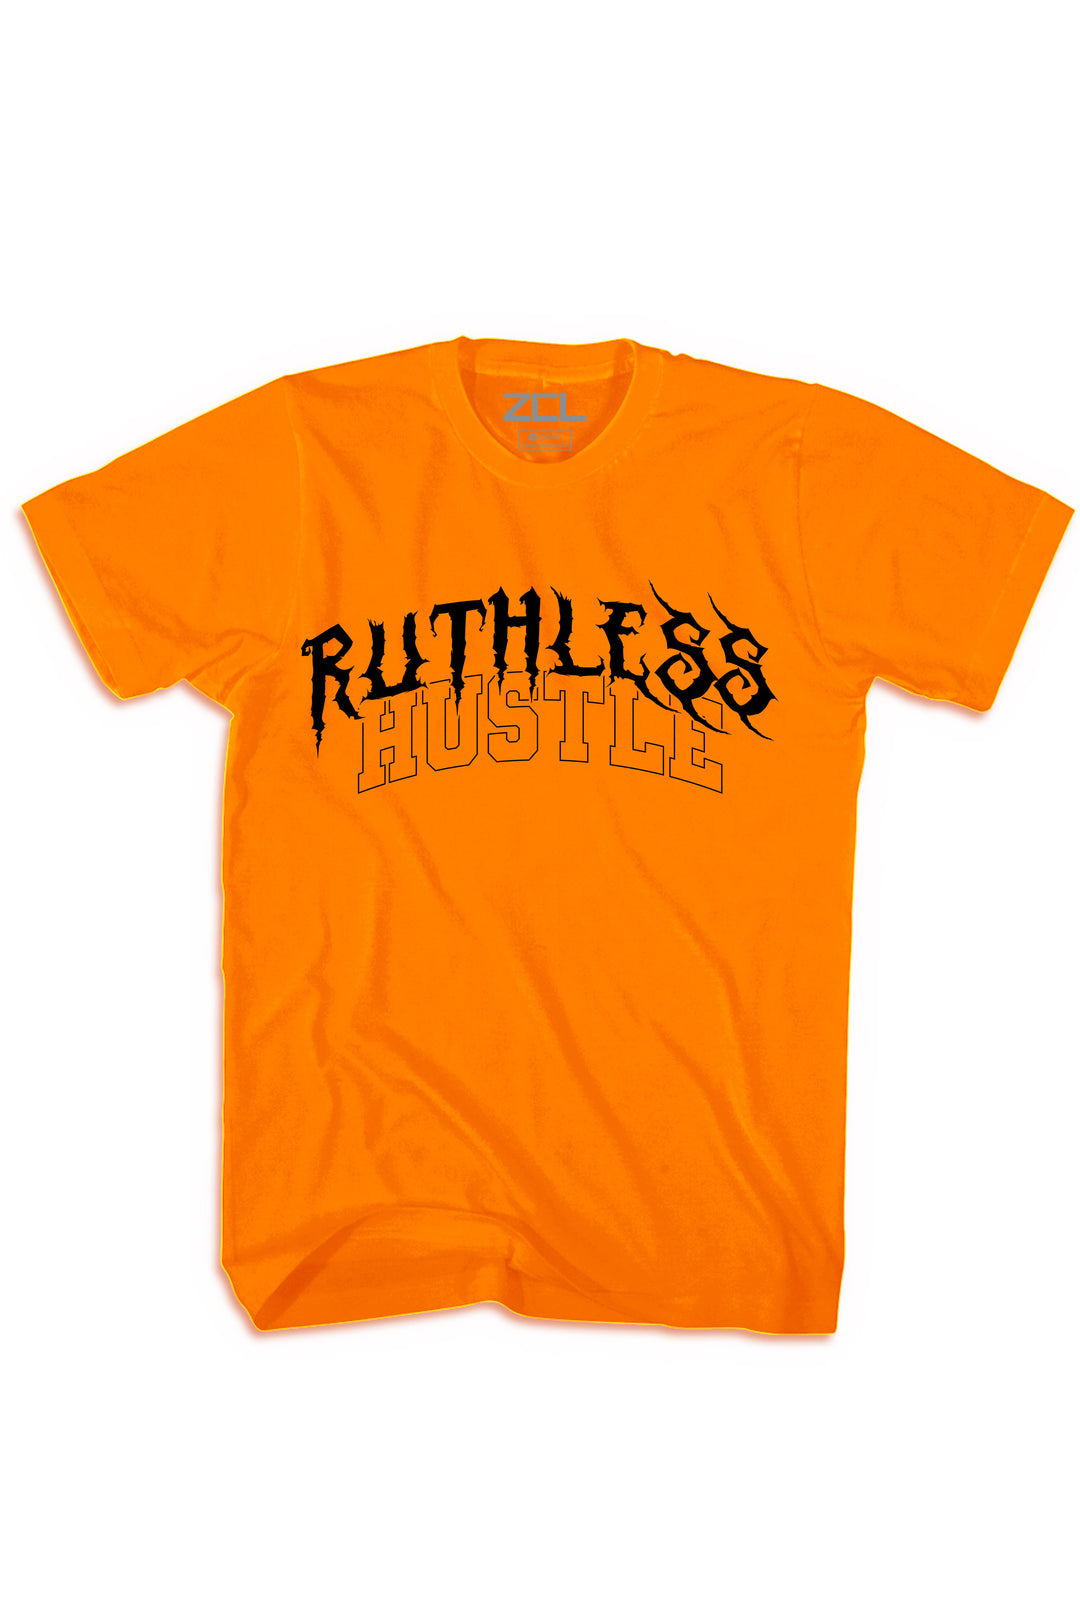 Ruthless Hustle Tee (Black Logo) - Zamage